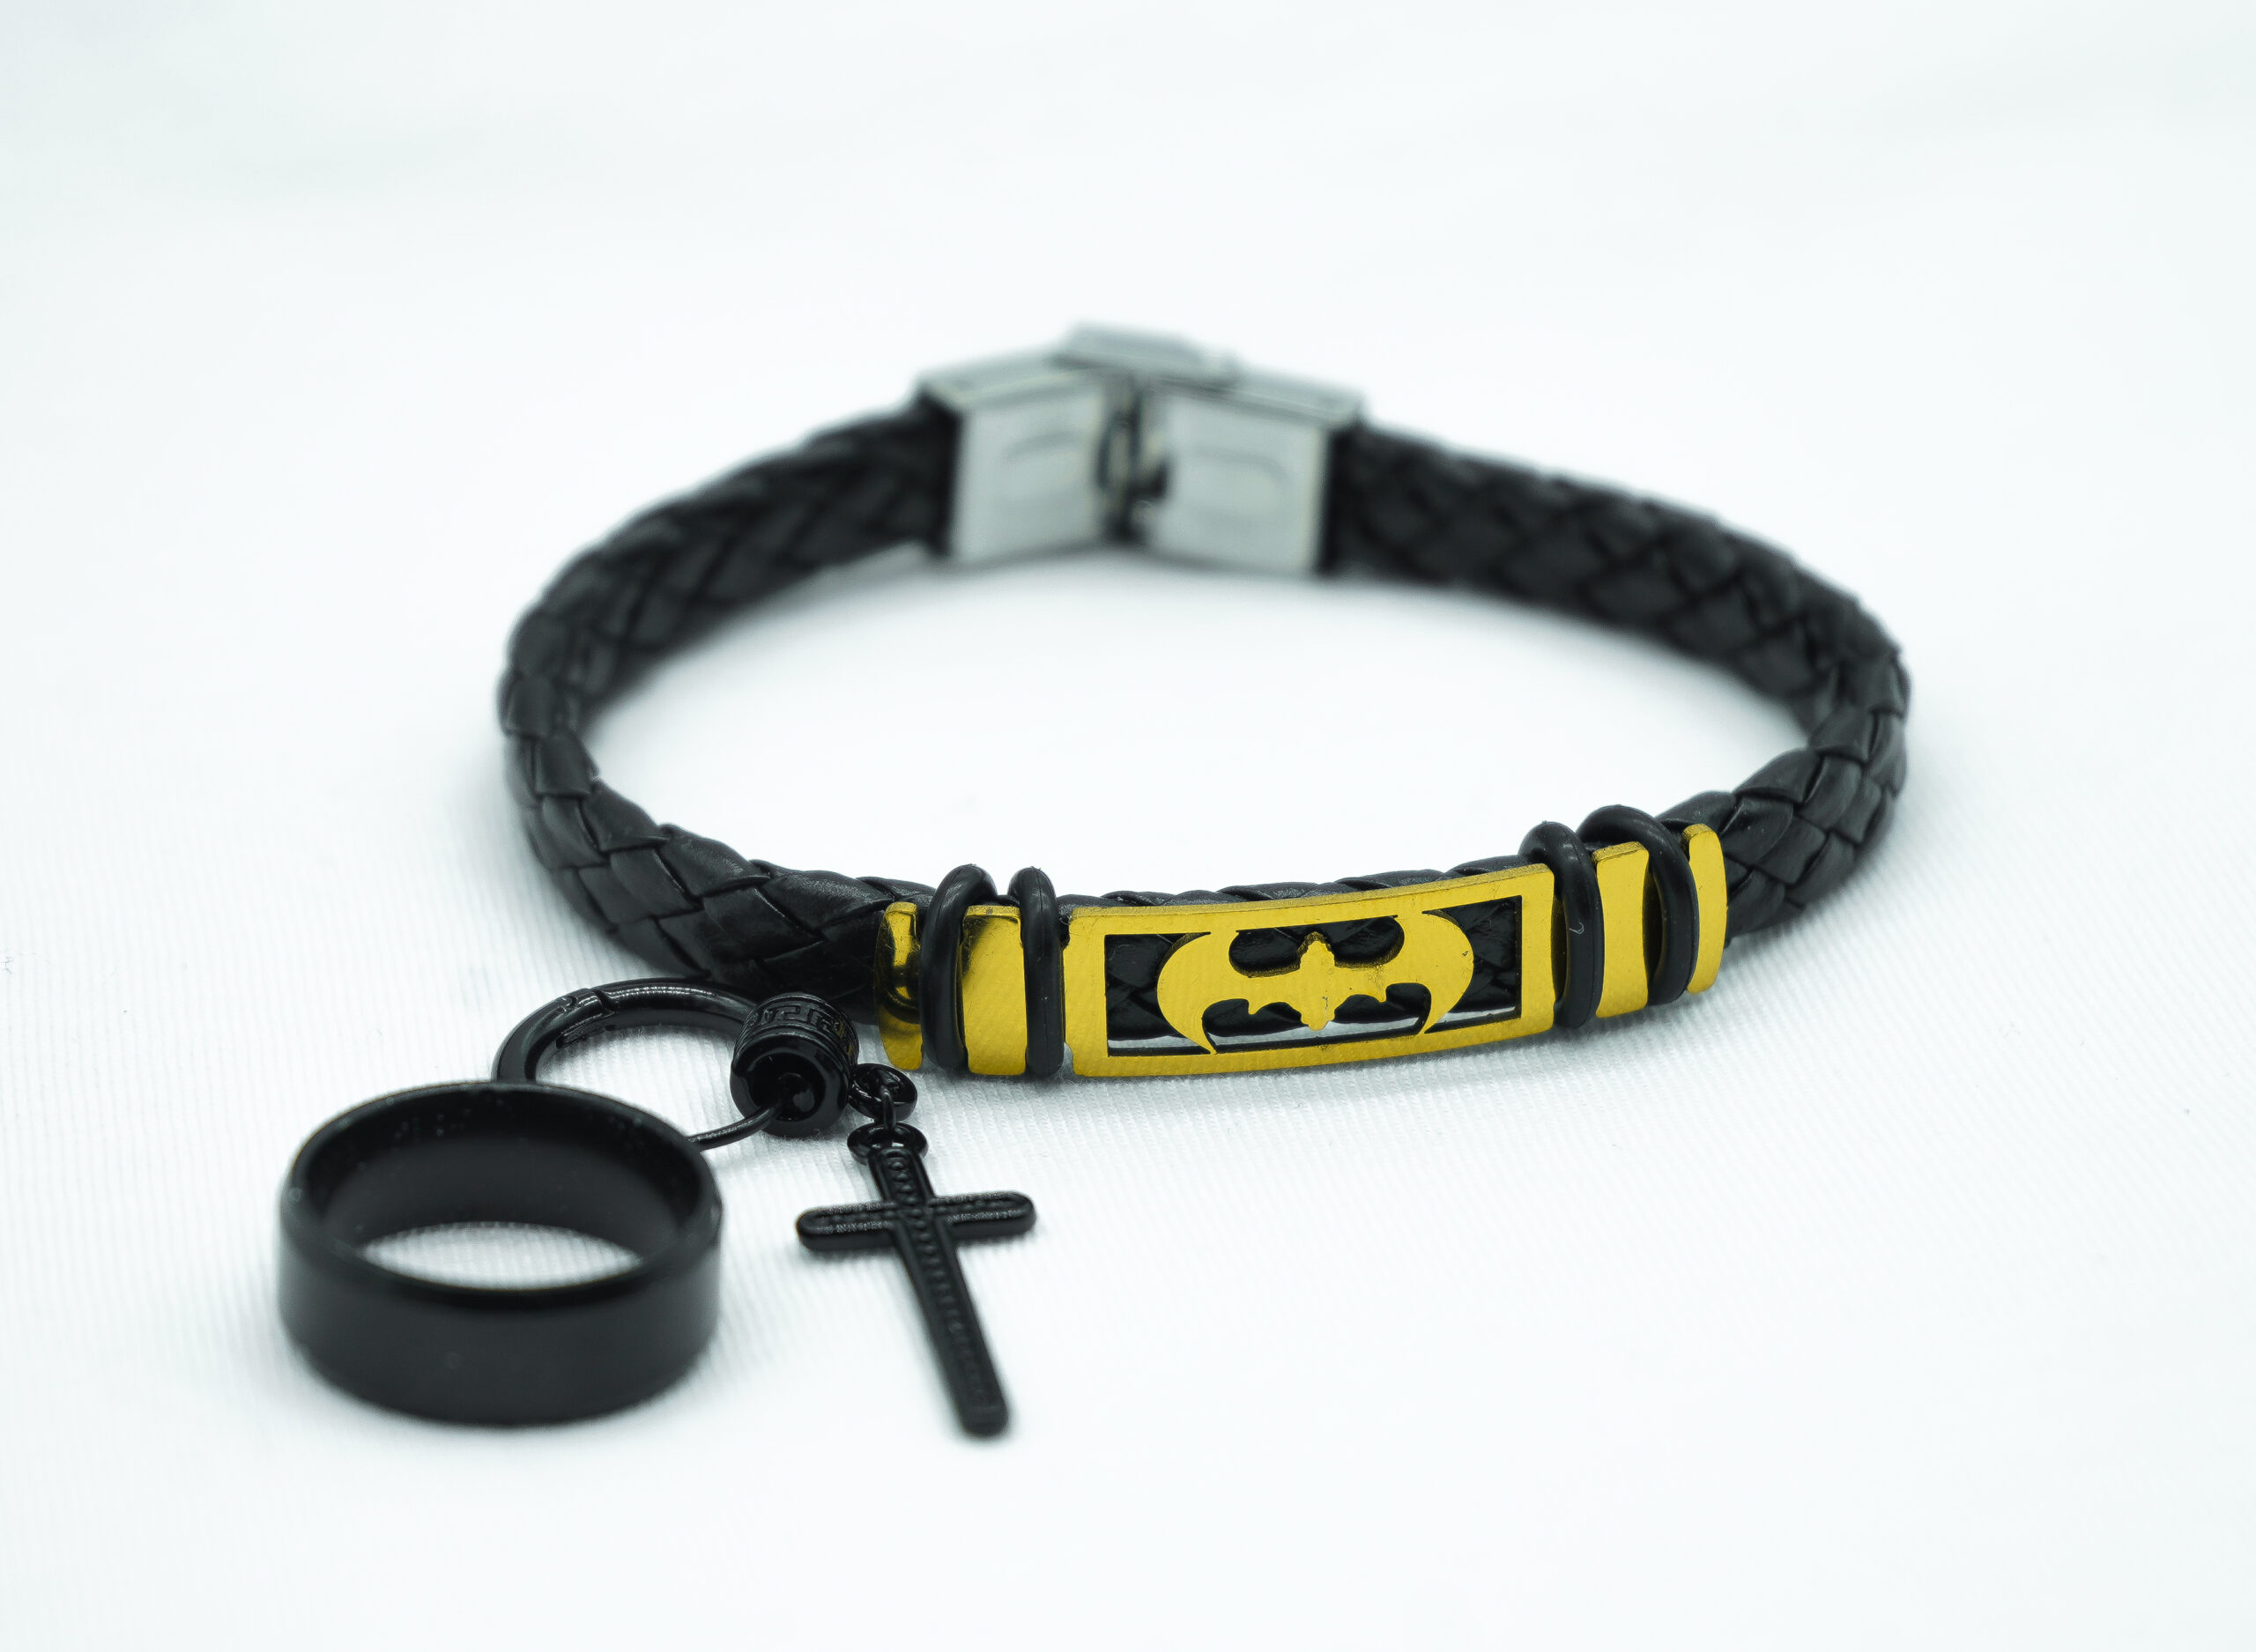 Batman Black Adjustable Leather Bracelet